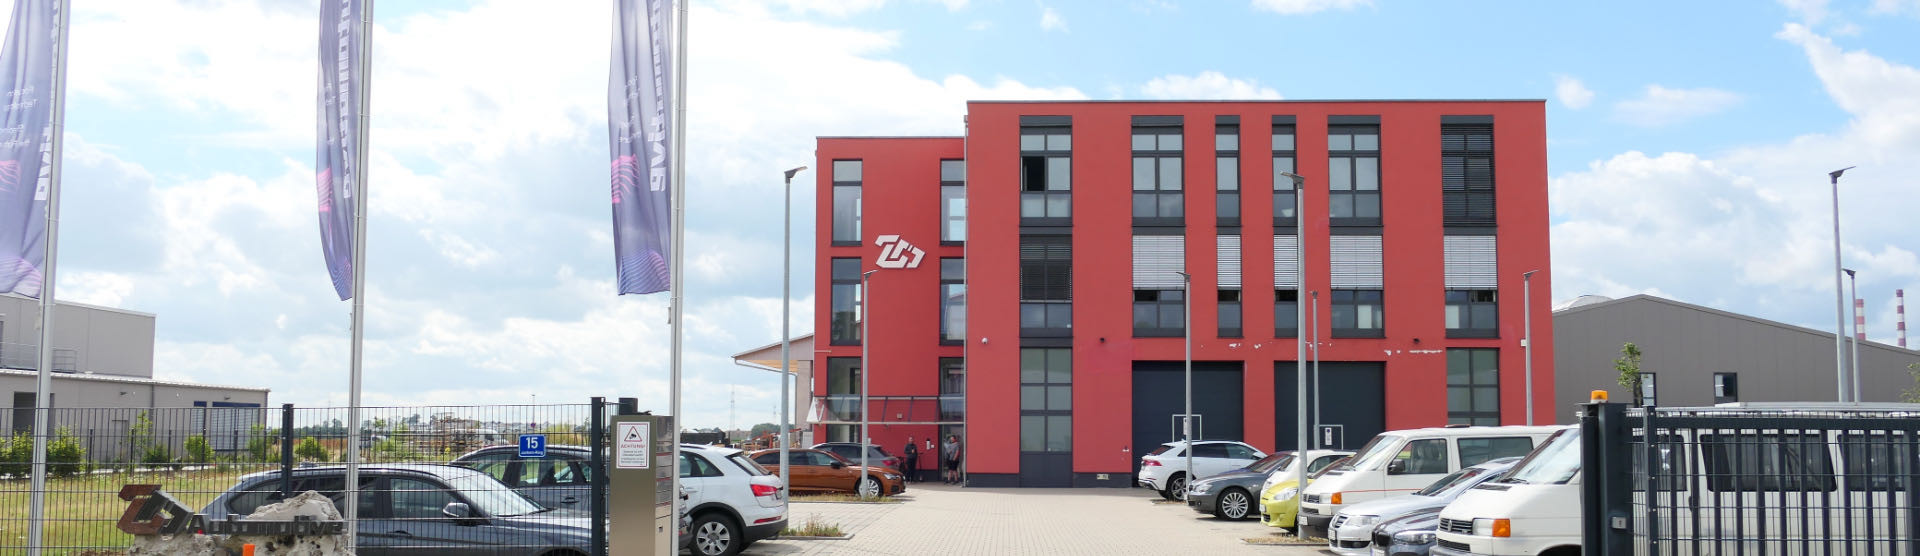 ZD Automotive GmbH